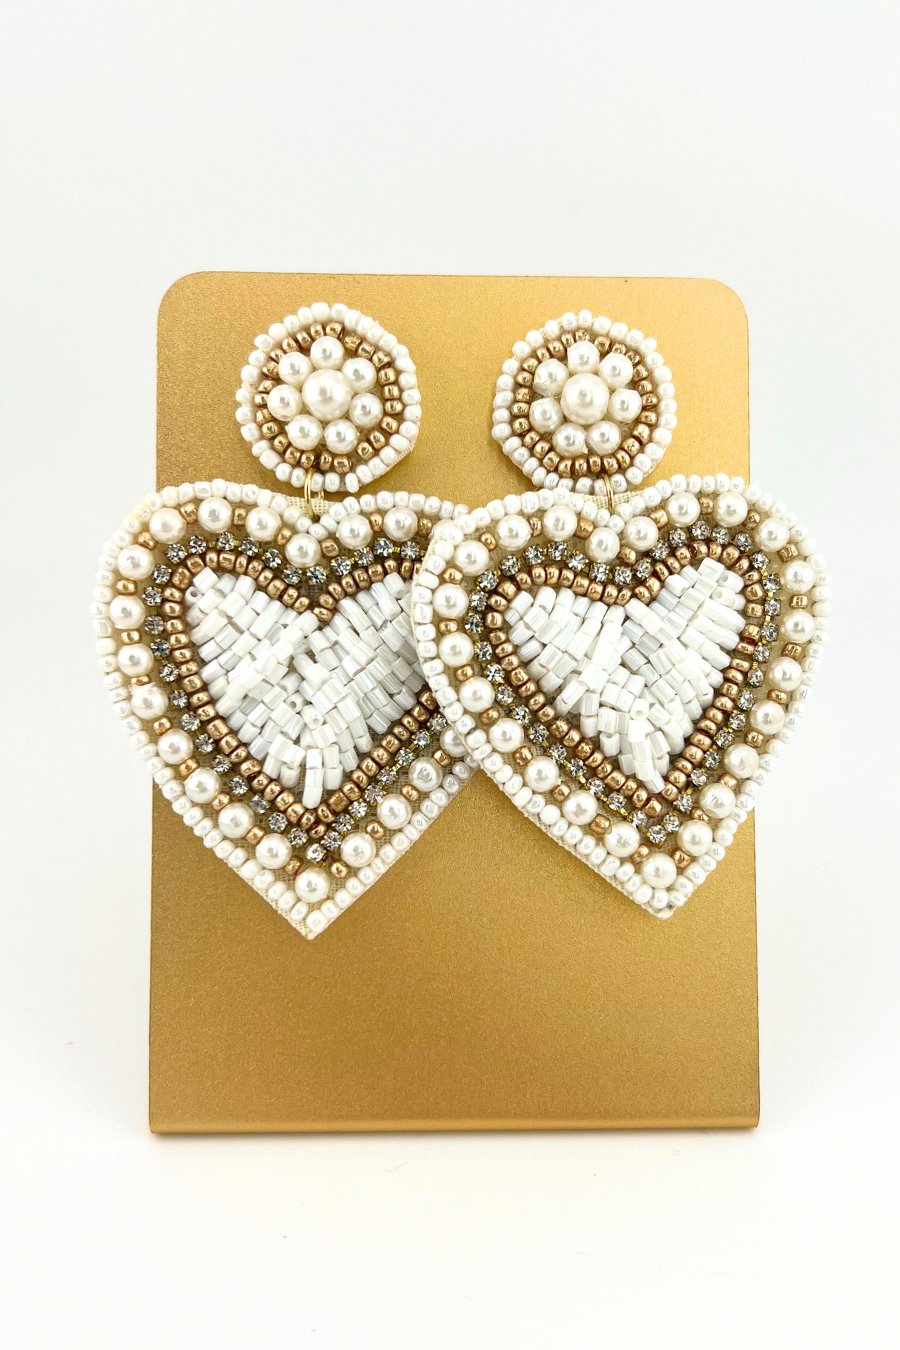 Frehsky Earrings for Women Handmade Beaded Lips Valentine's Day Earrings Fashion Love Hand Made Boho Rice Beaded Earrings Valentines Day Gifts, Adult